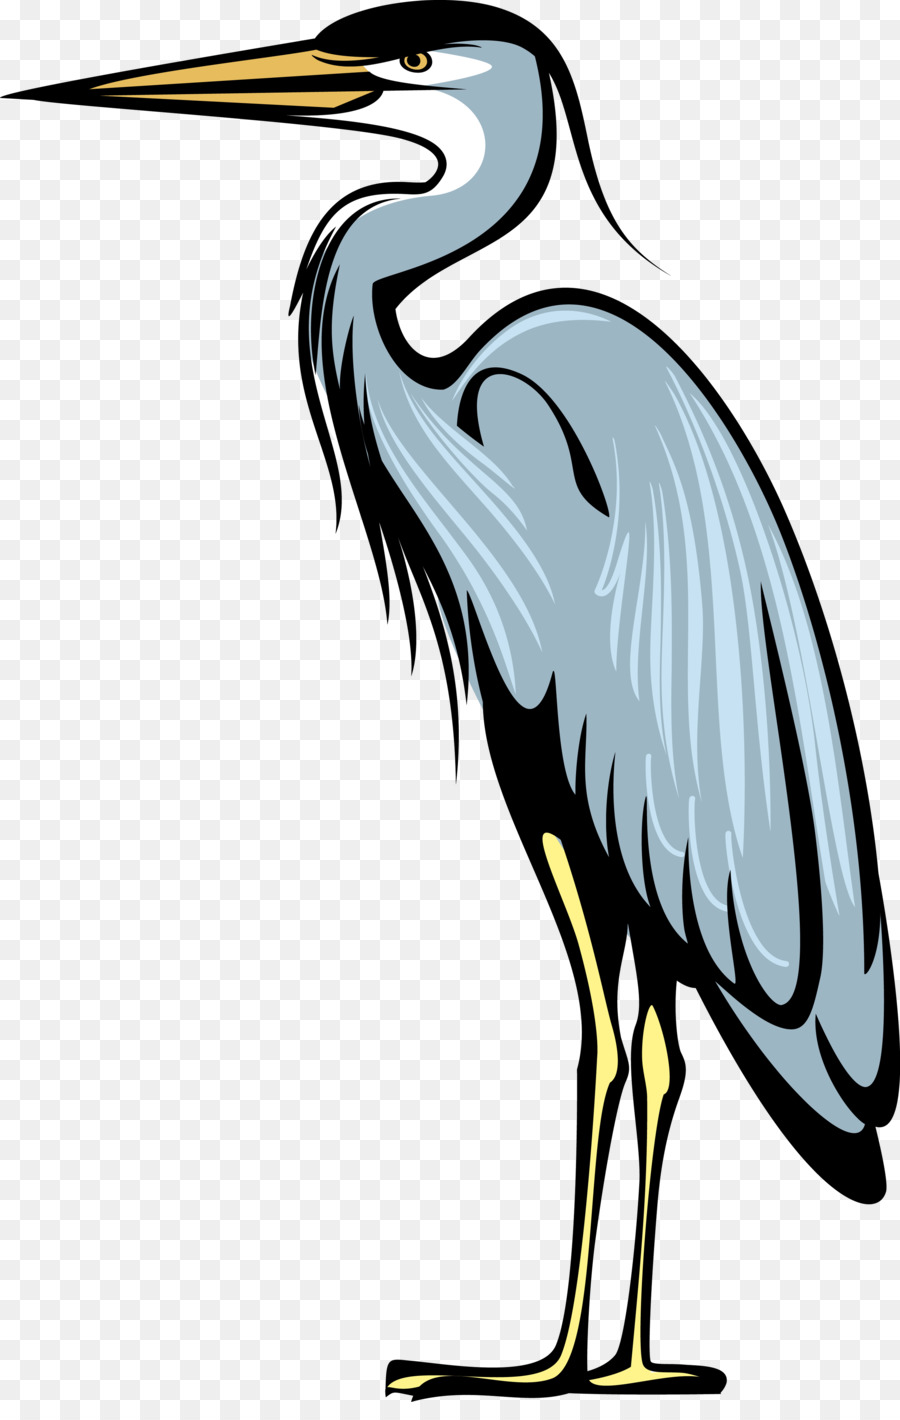 Free Great Blue Heron Silhouette, Download Free Great Blue Heron ...